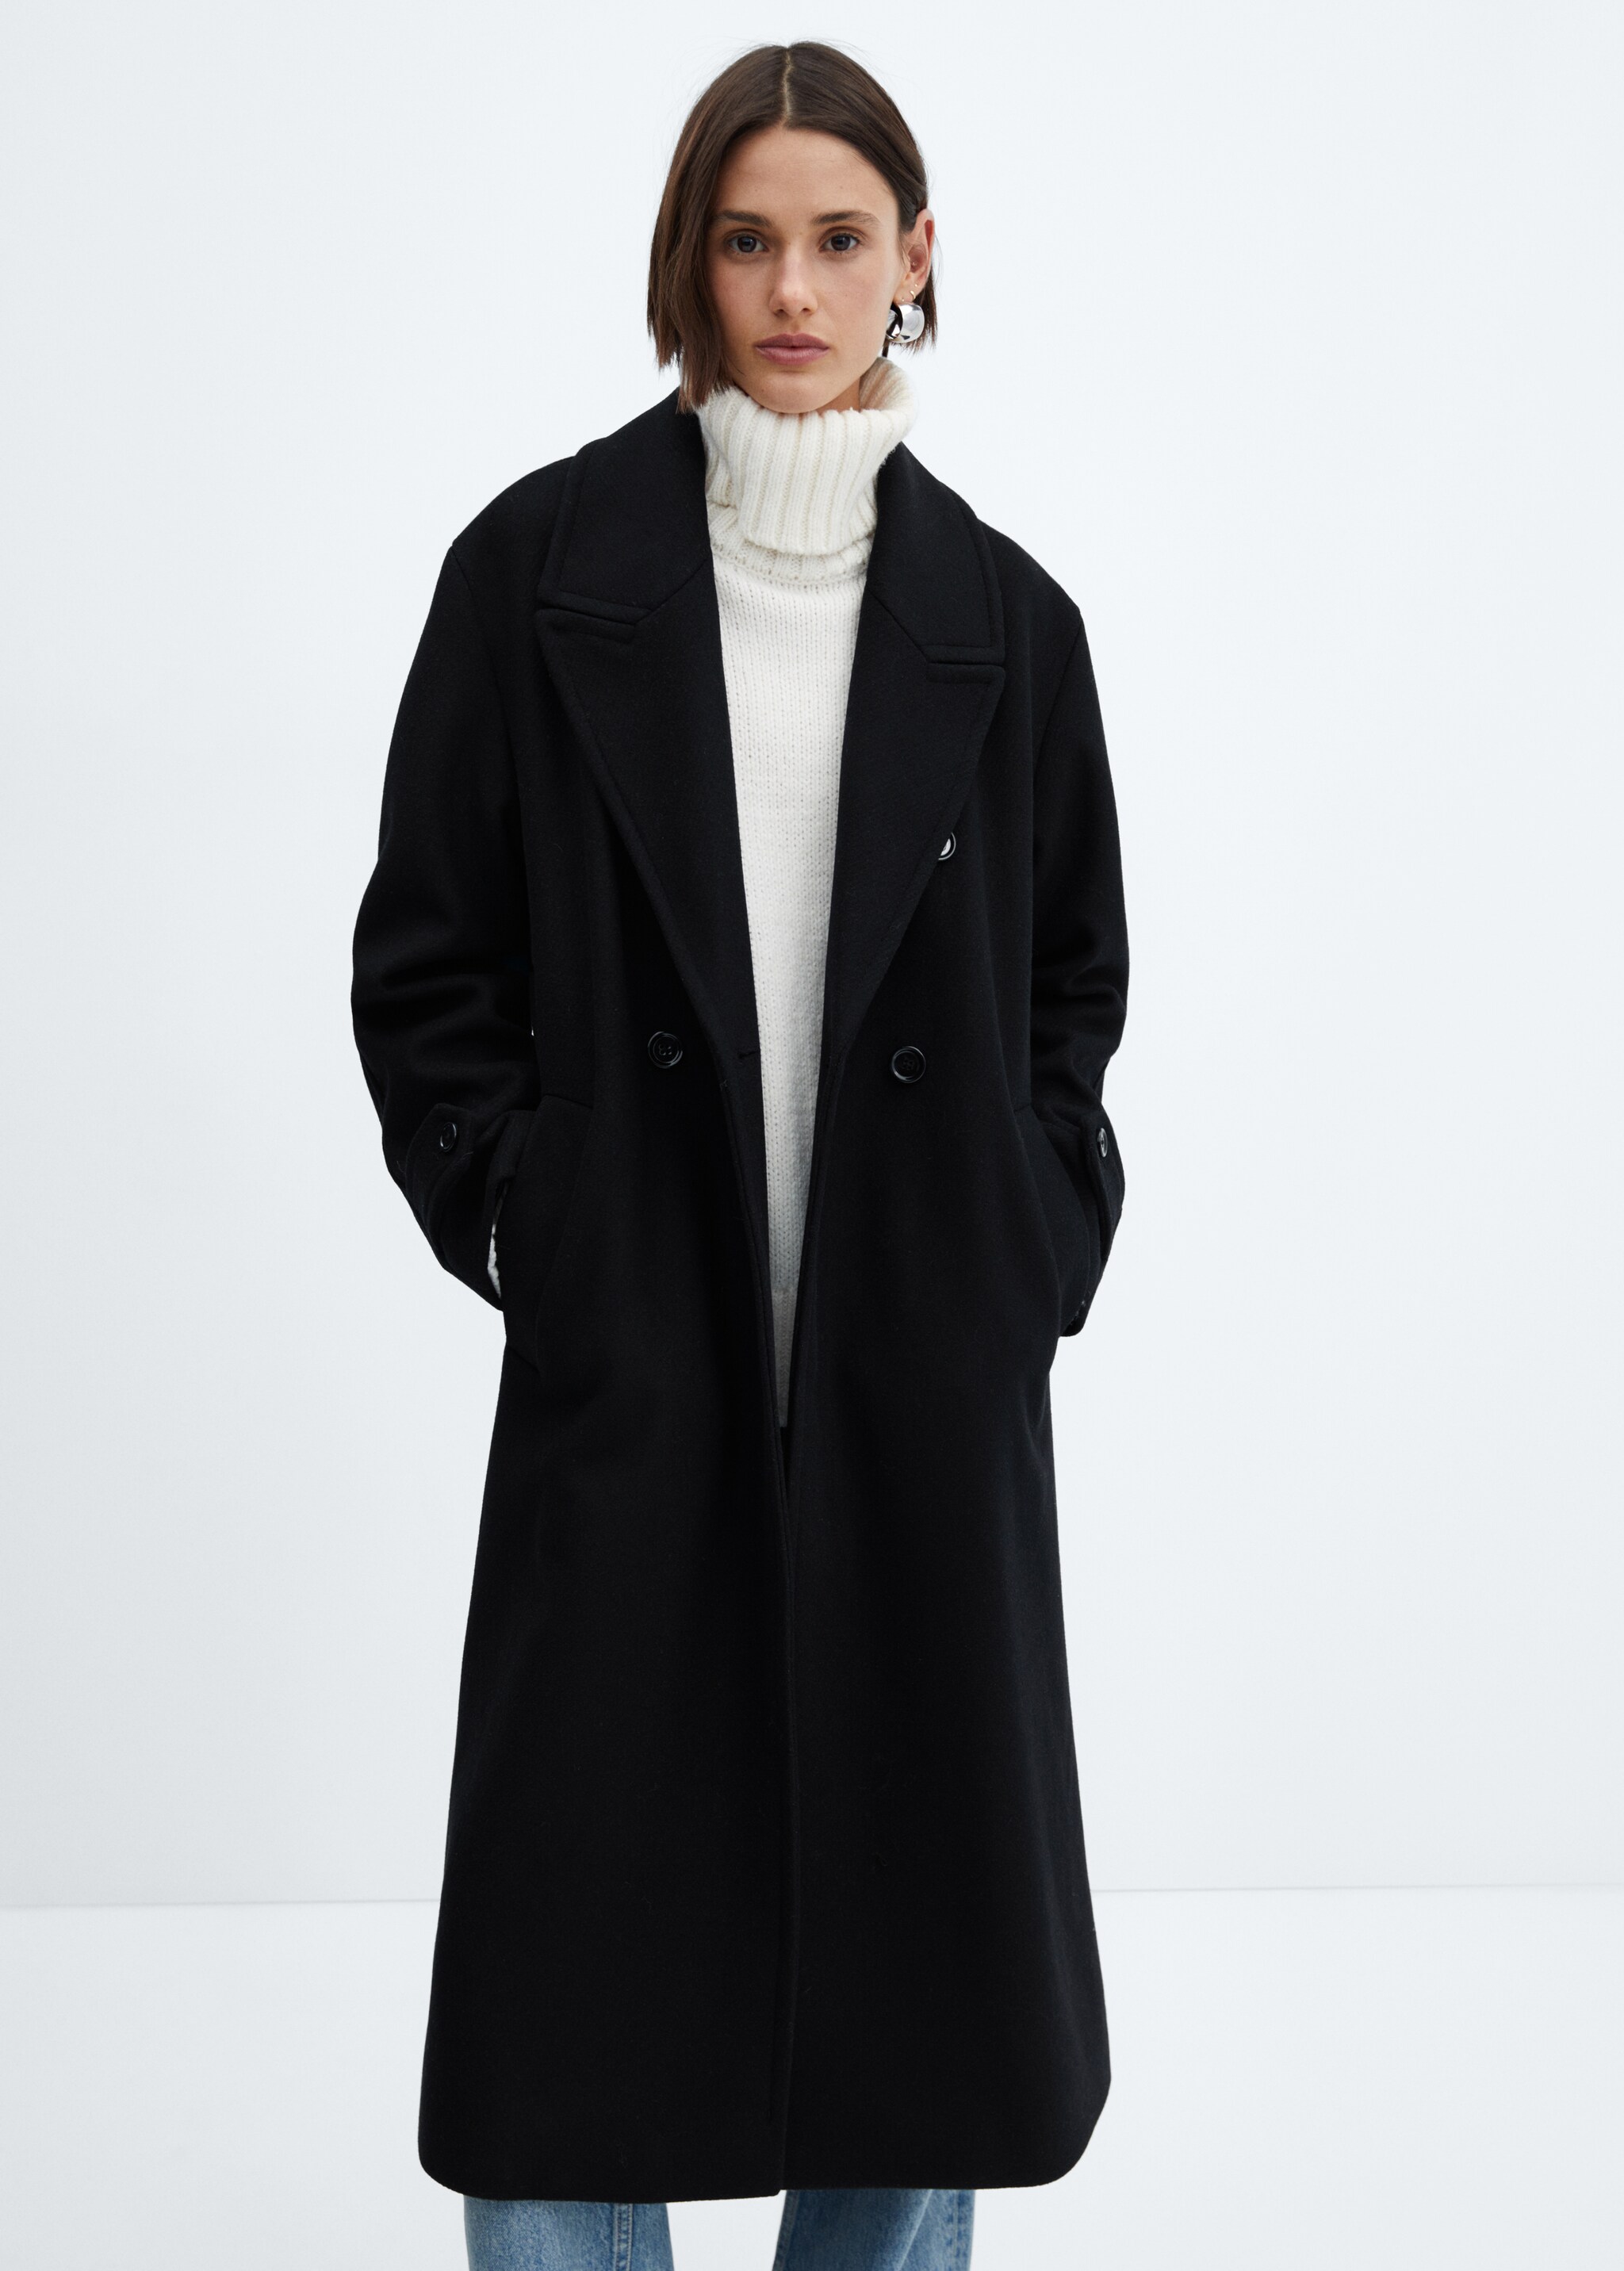 Oversize wool coat - Medium plane